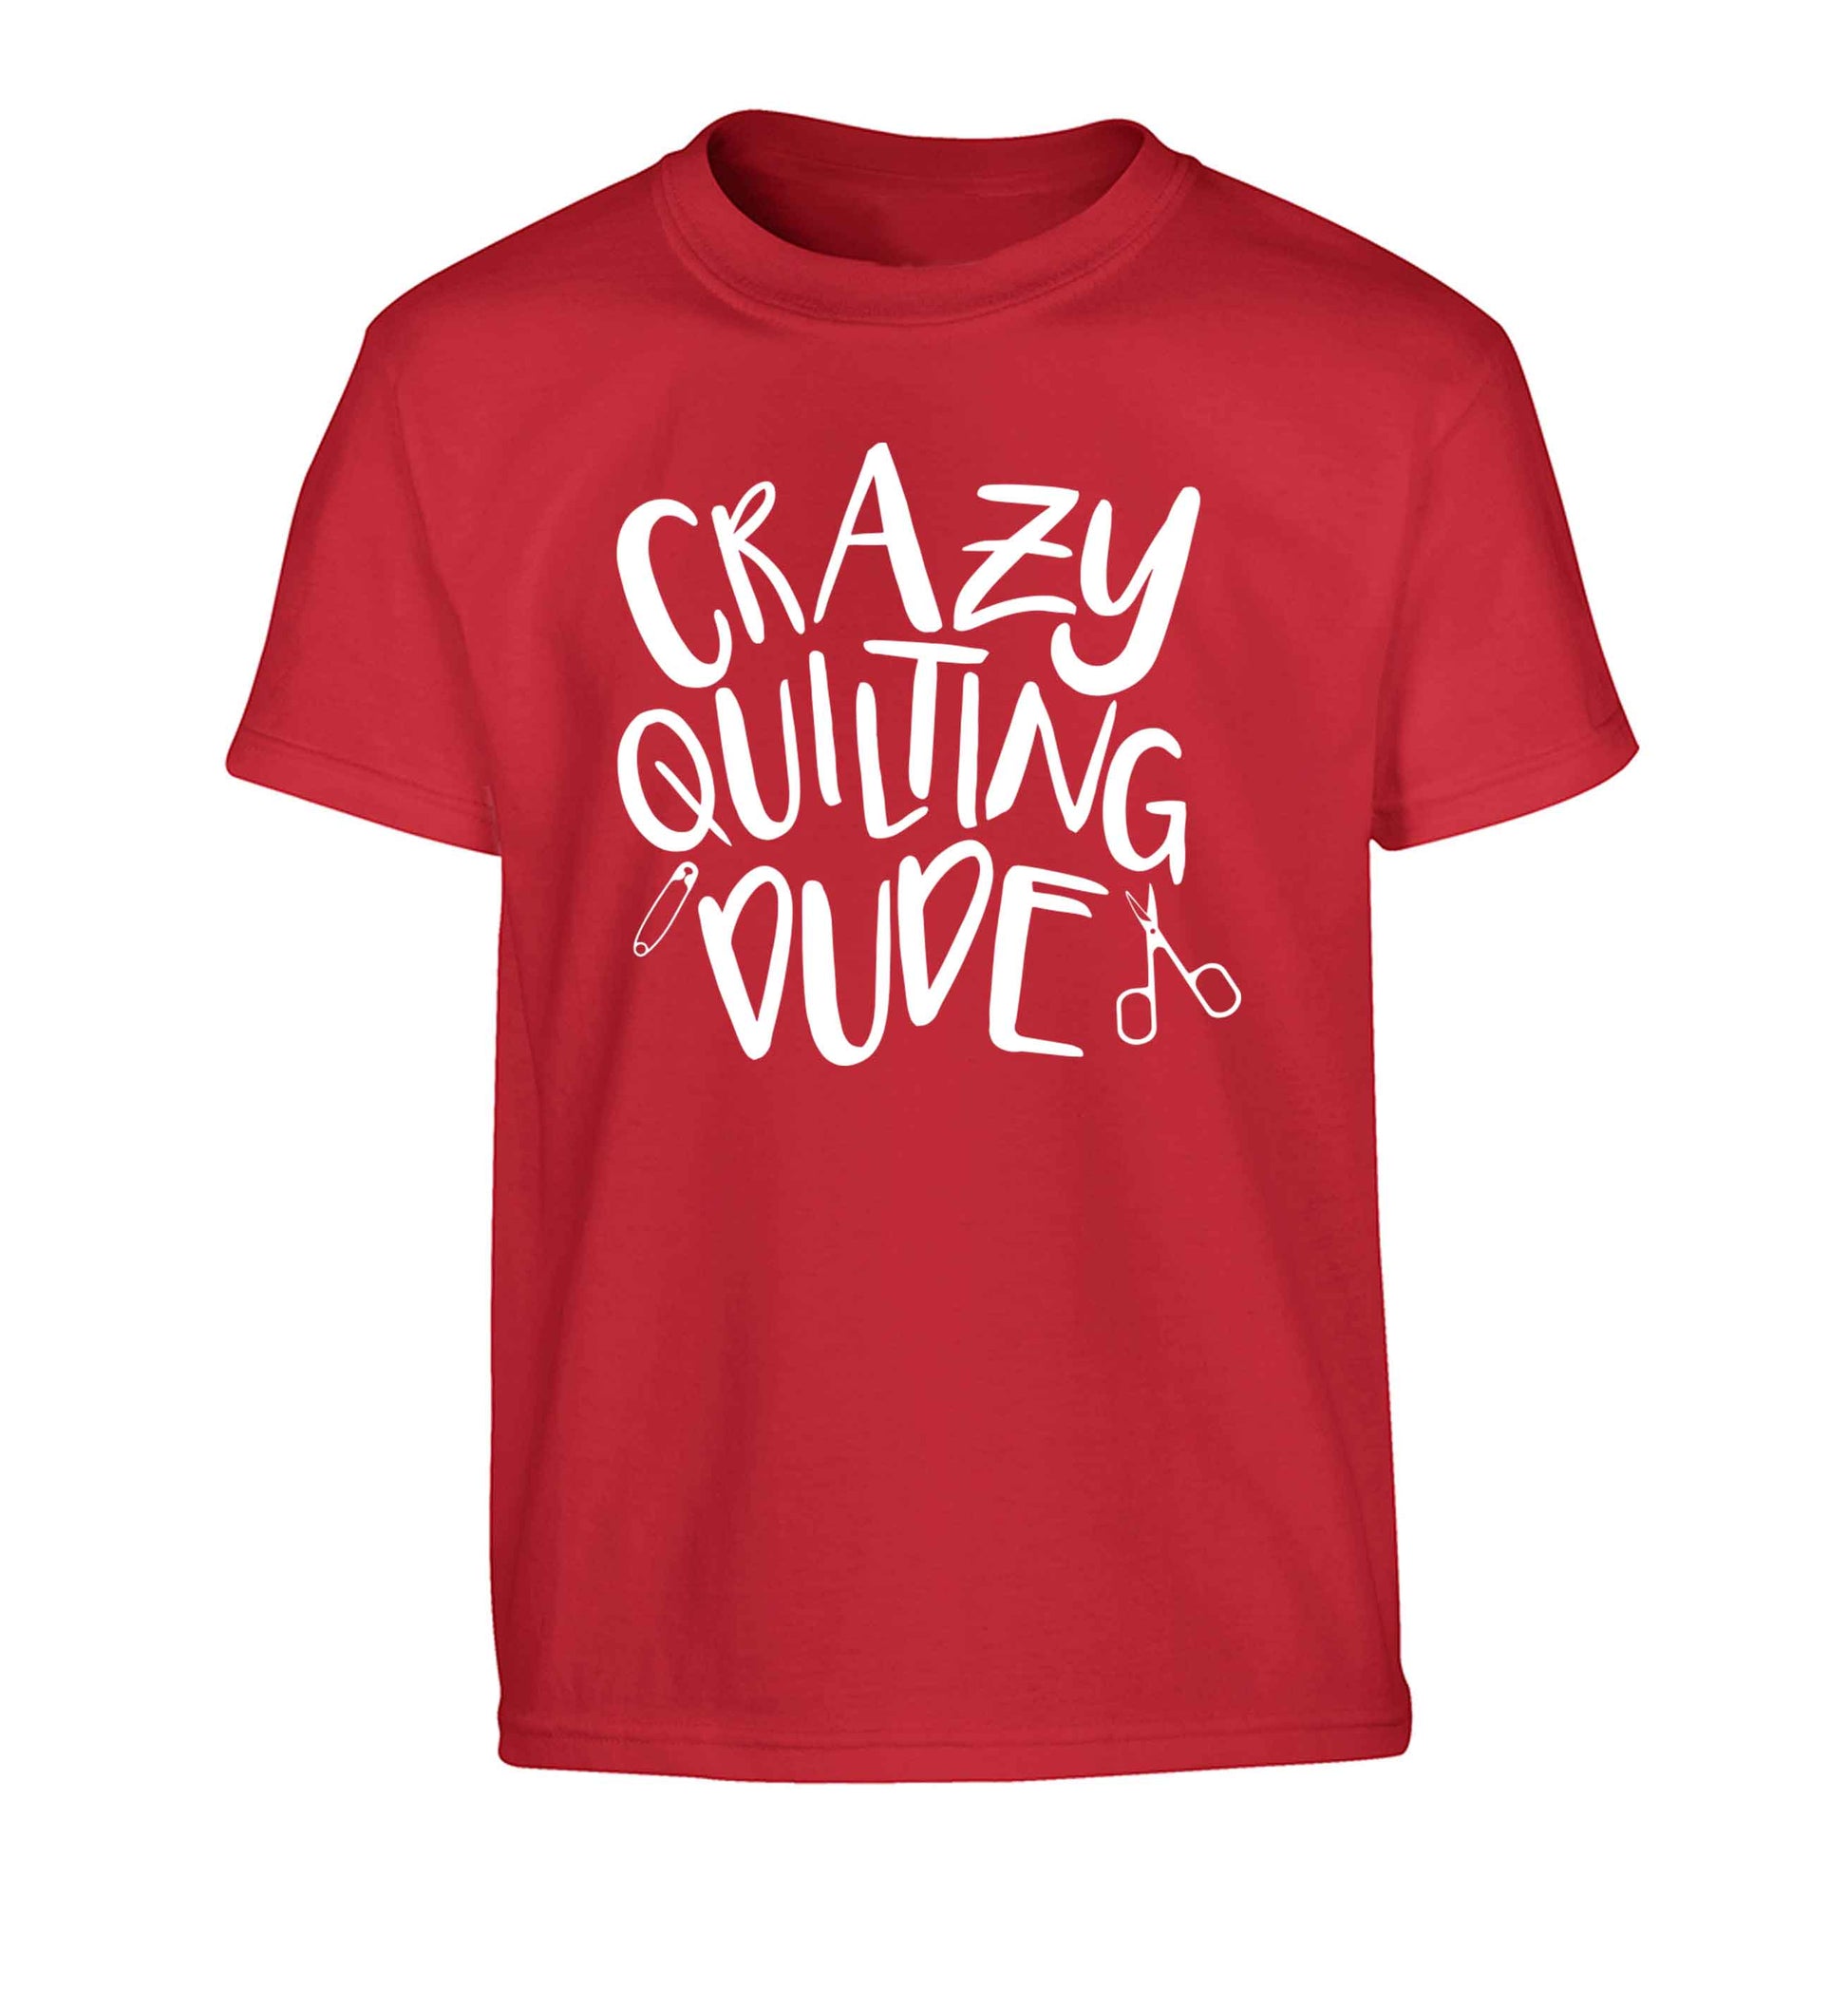 Crazy quilting dude Children's red Tshirt 12-13 Years